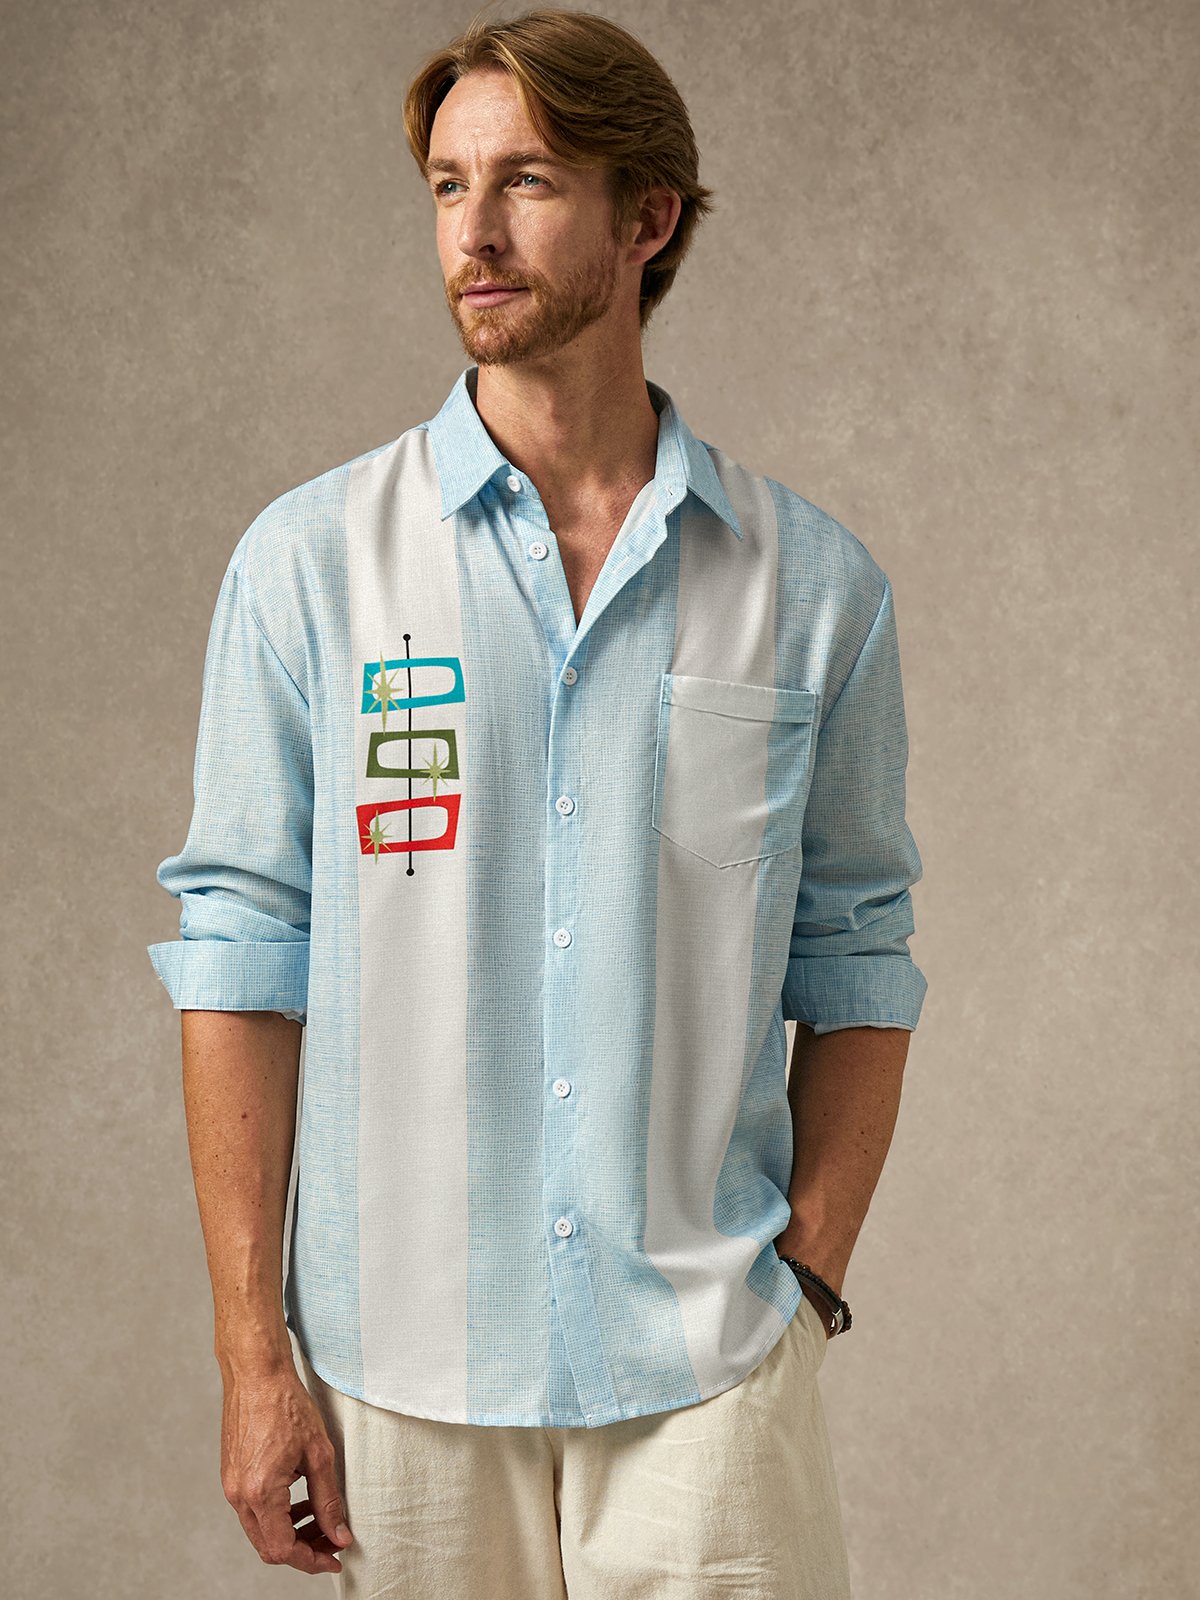 Hardaddy Mid-century Geometry Chest Pocket Long Sleeve Bowling Shirt